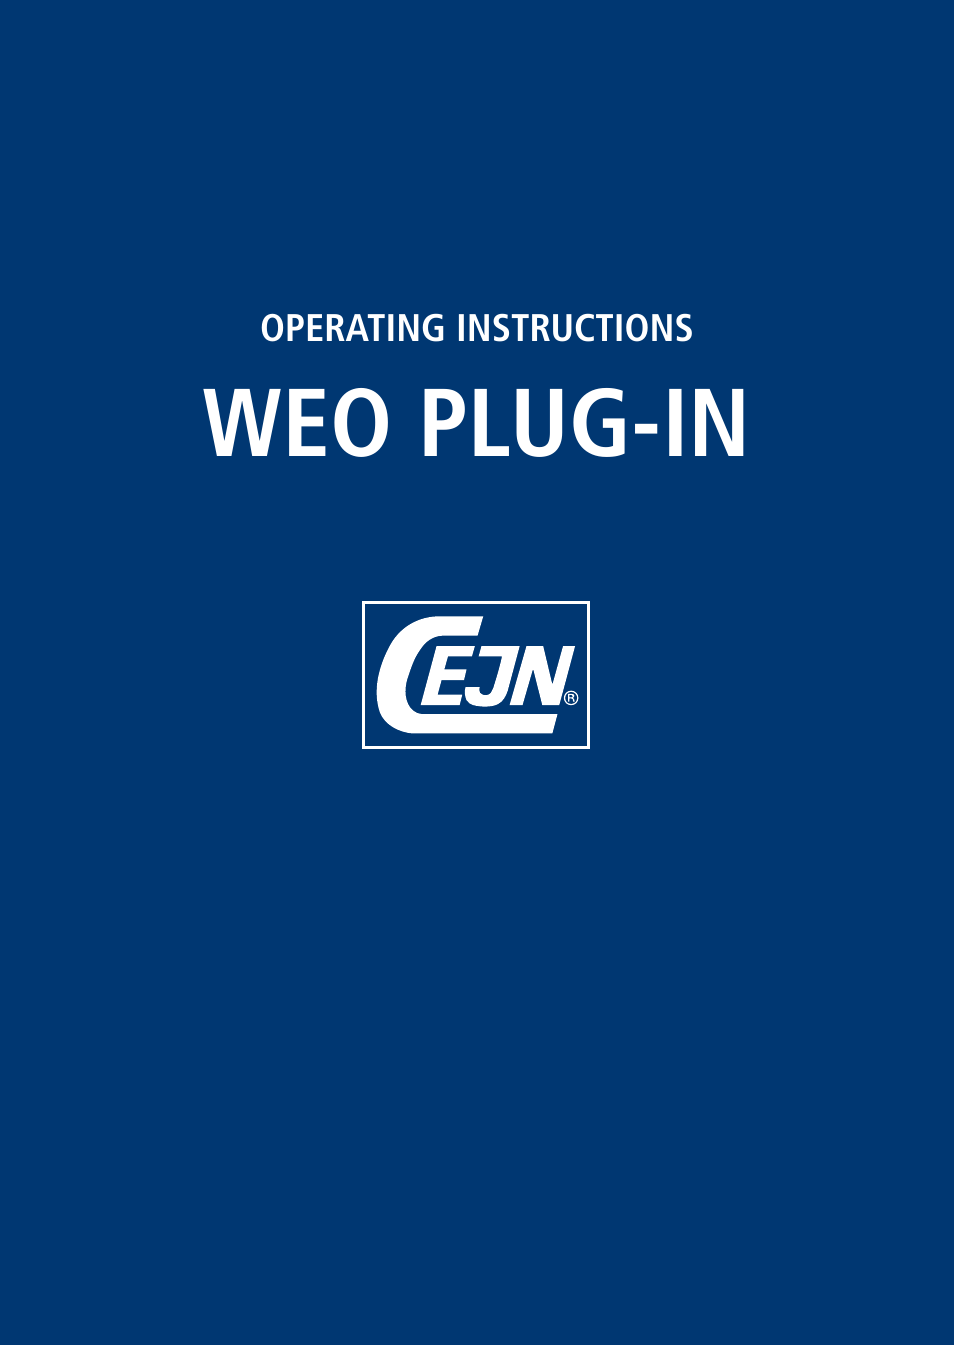 WEO Plug-In